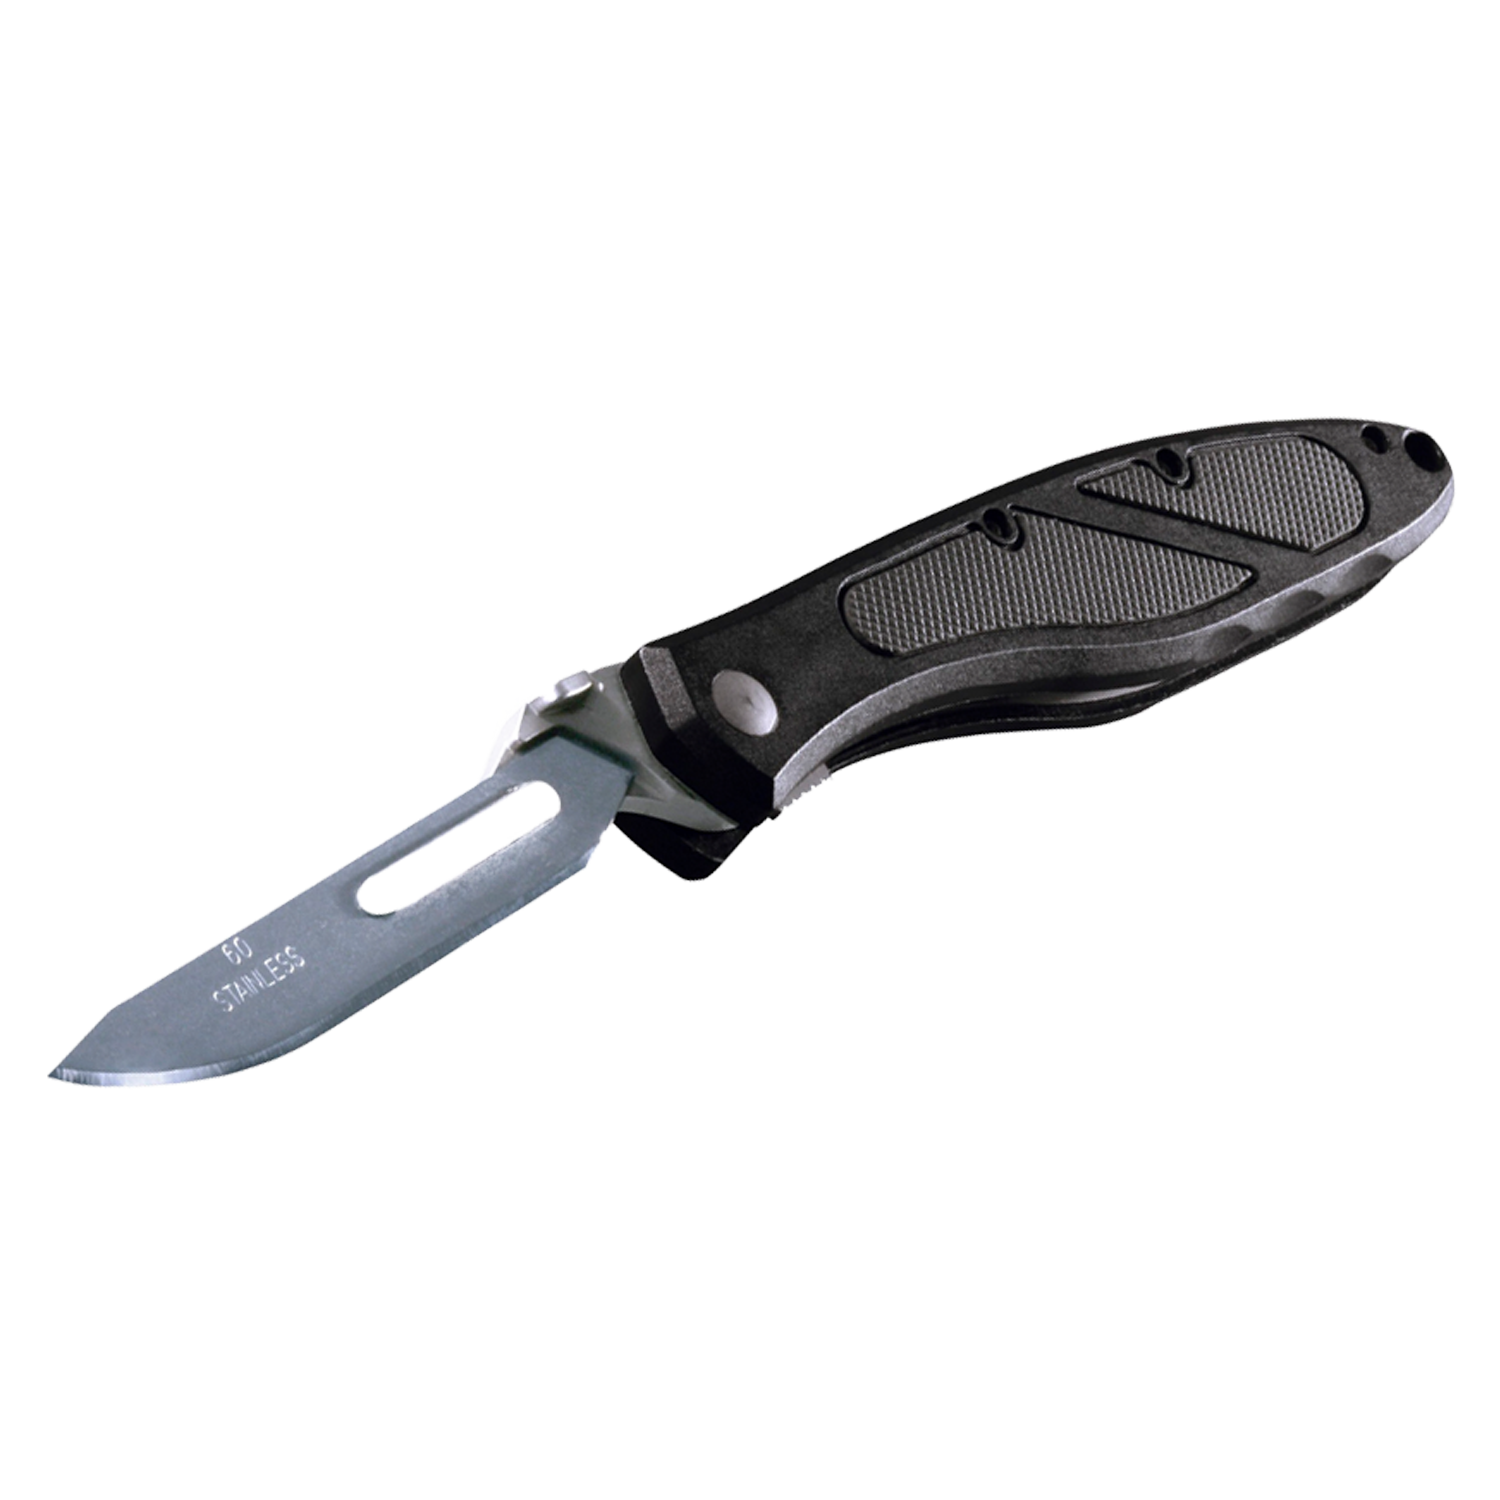 Piranta Z - Skinning Knife